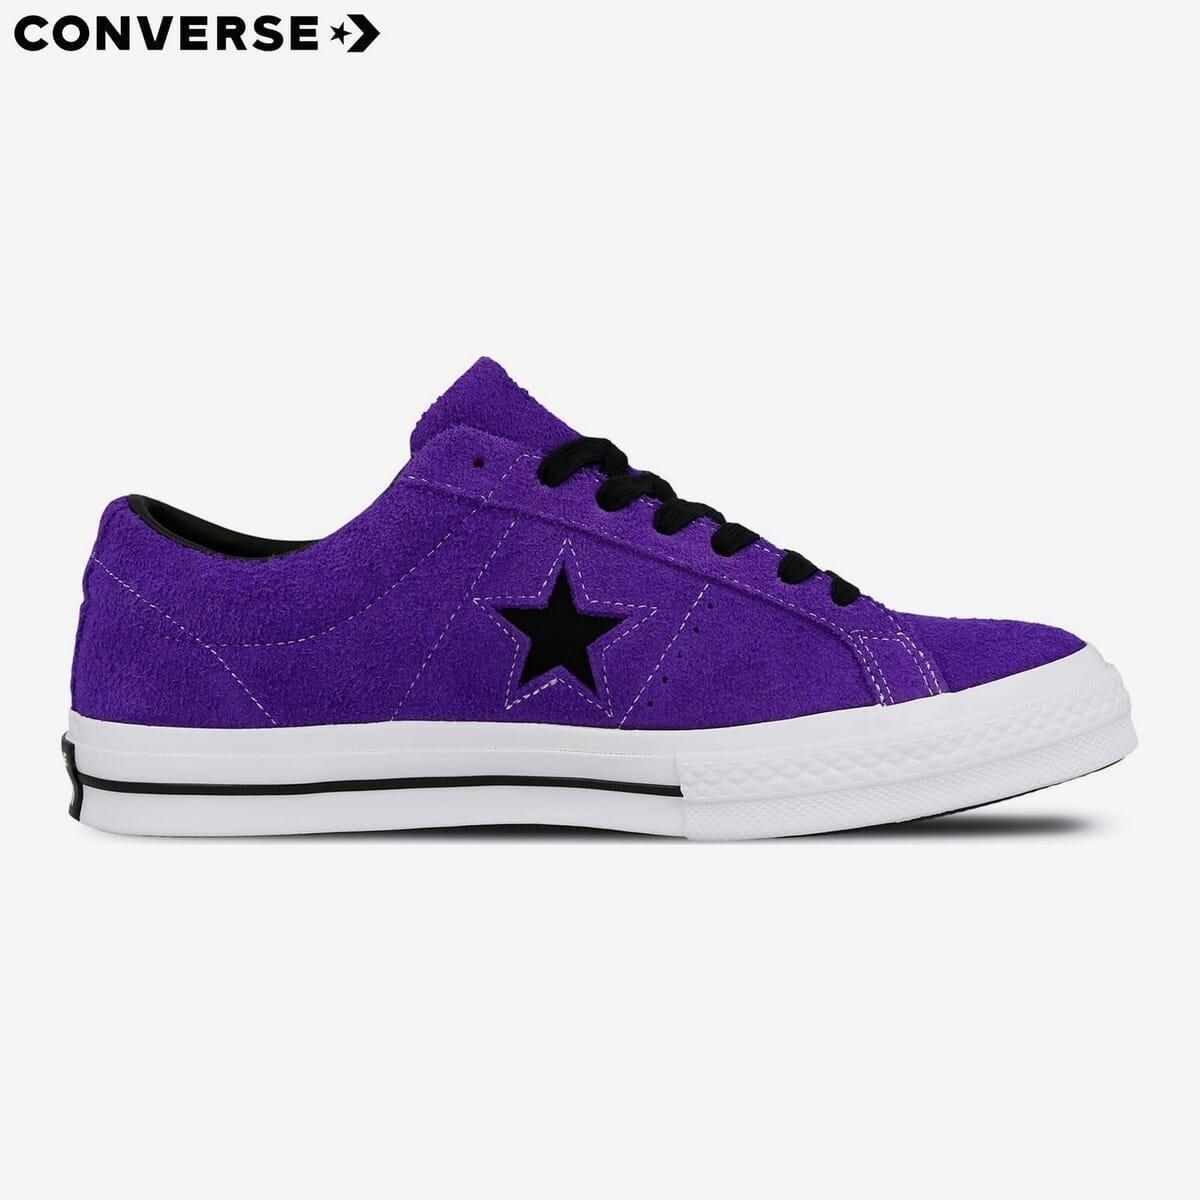 converse one star premium suede purple skate shoes for unisex 163248c